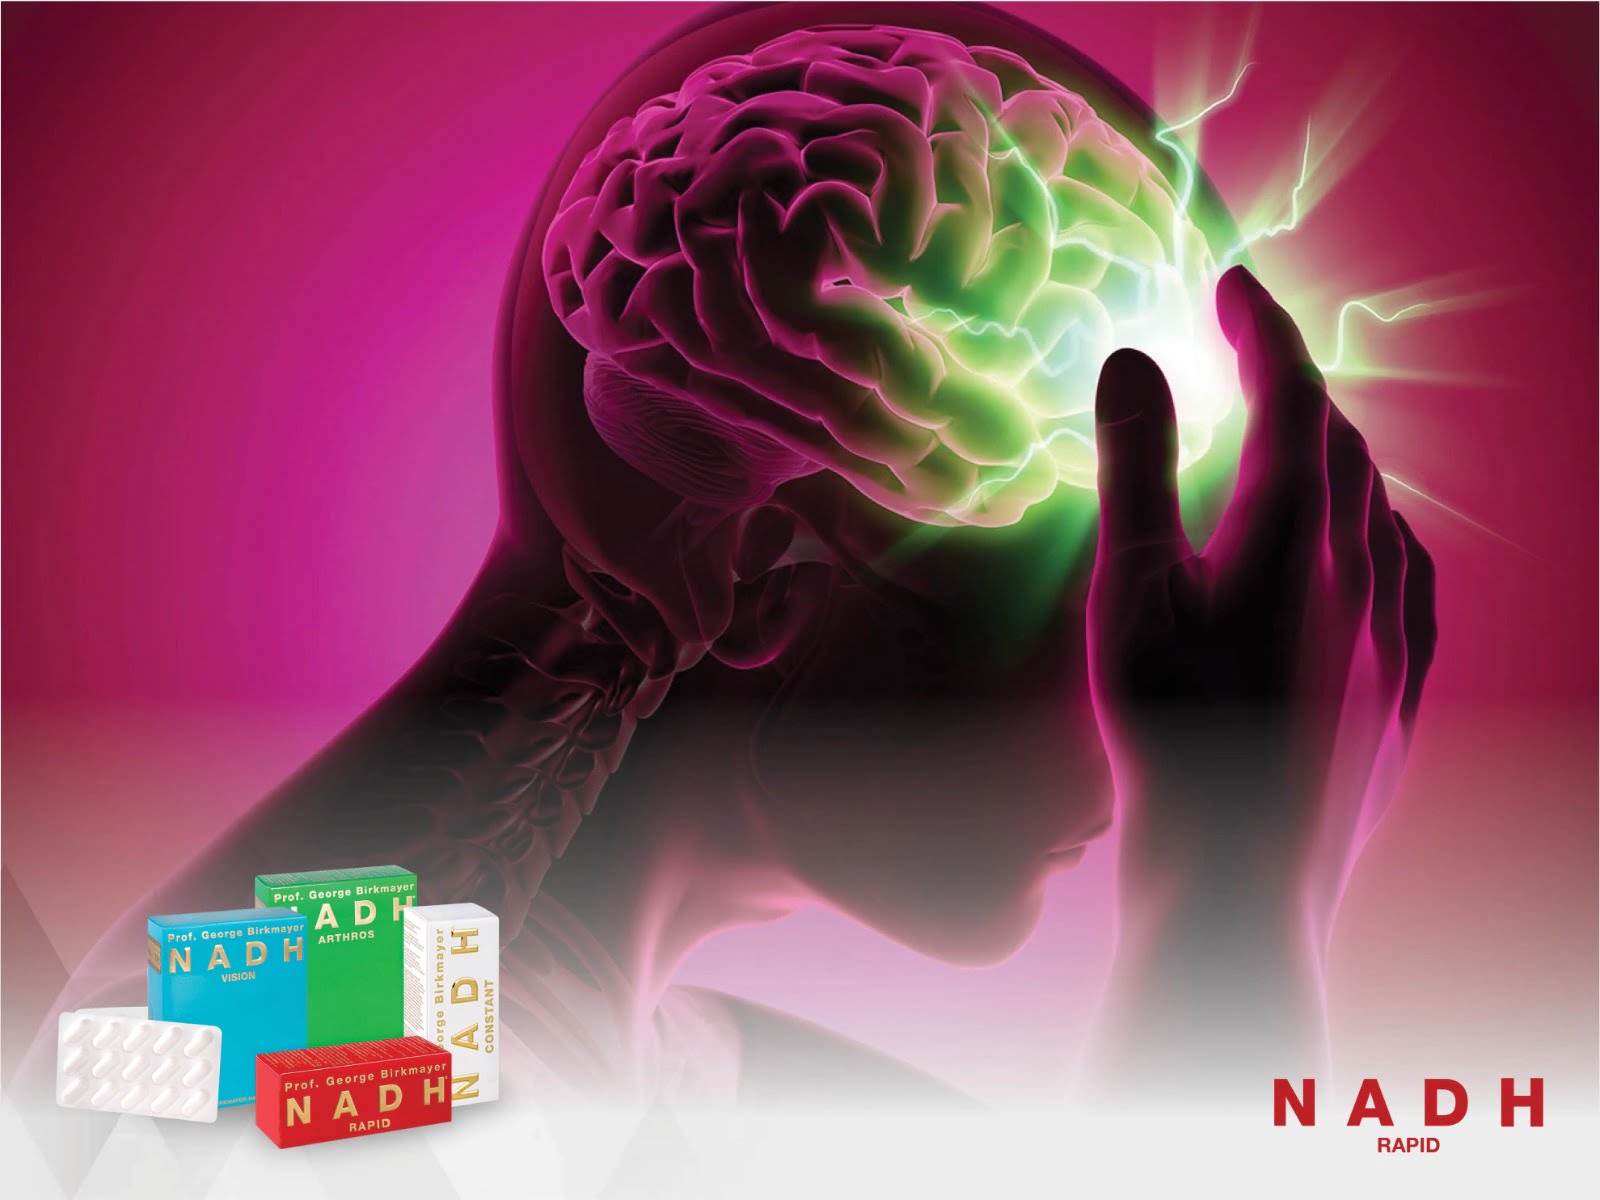 NADH și accidentul vascular cerebral